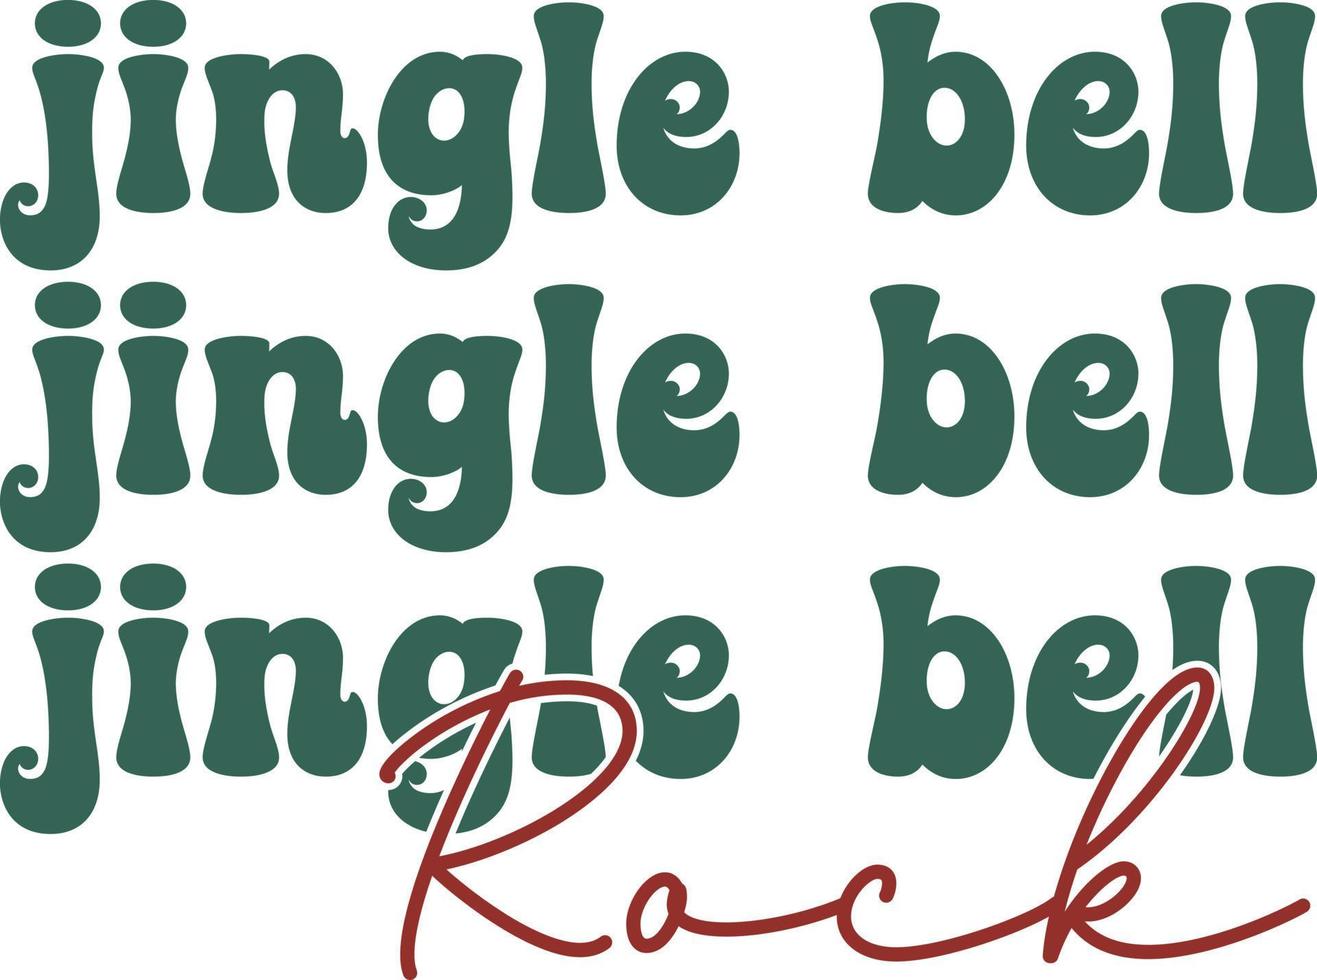 Jingle Bell Rock, Merry Christmas, Santa, Christmas Holiday, Vector Illustration File